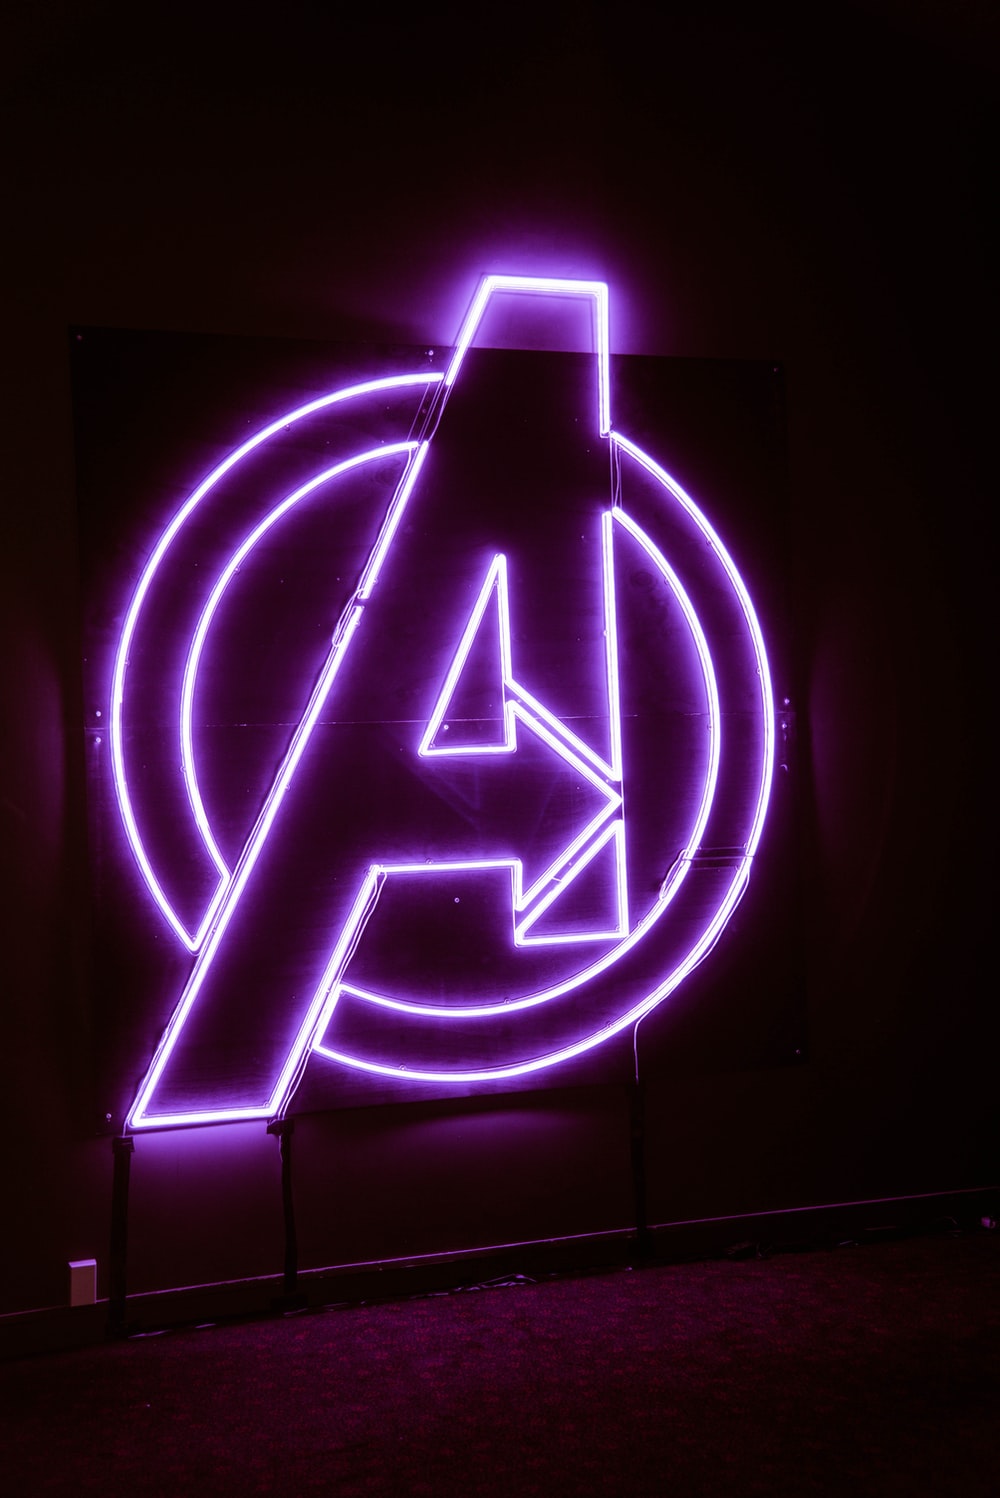 Neon Avengers Wallpapers